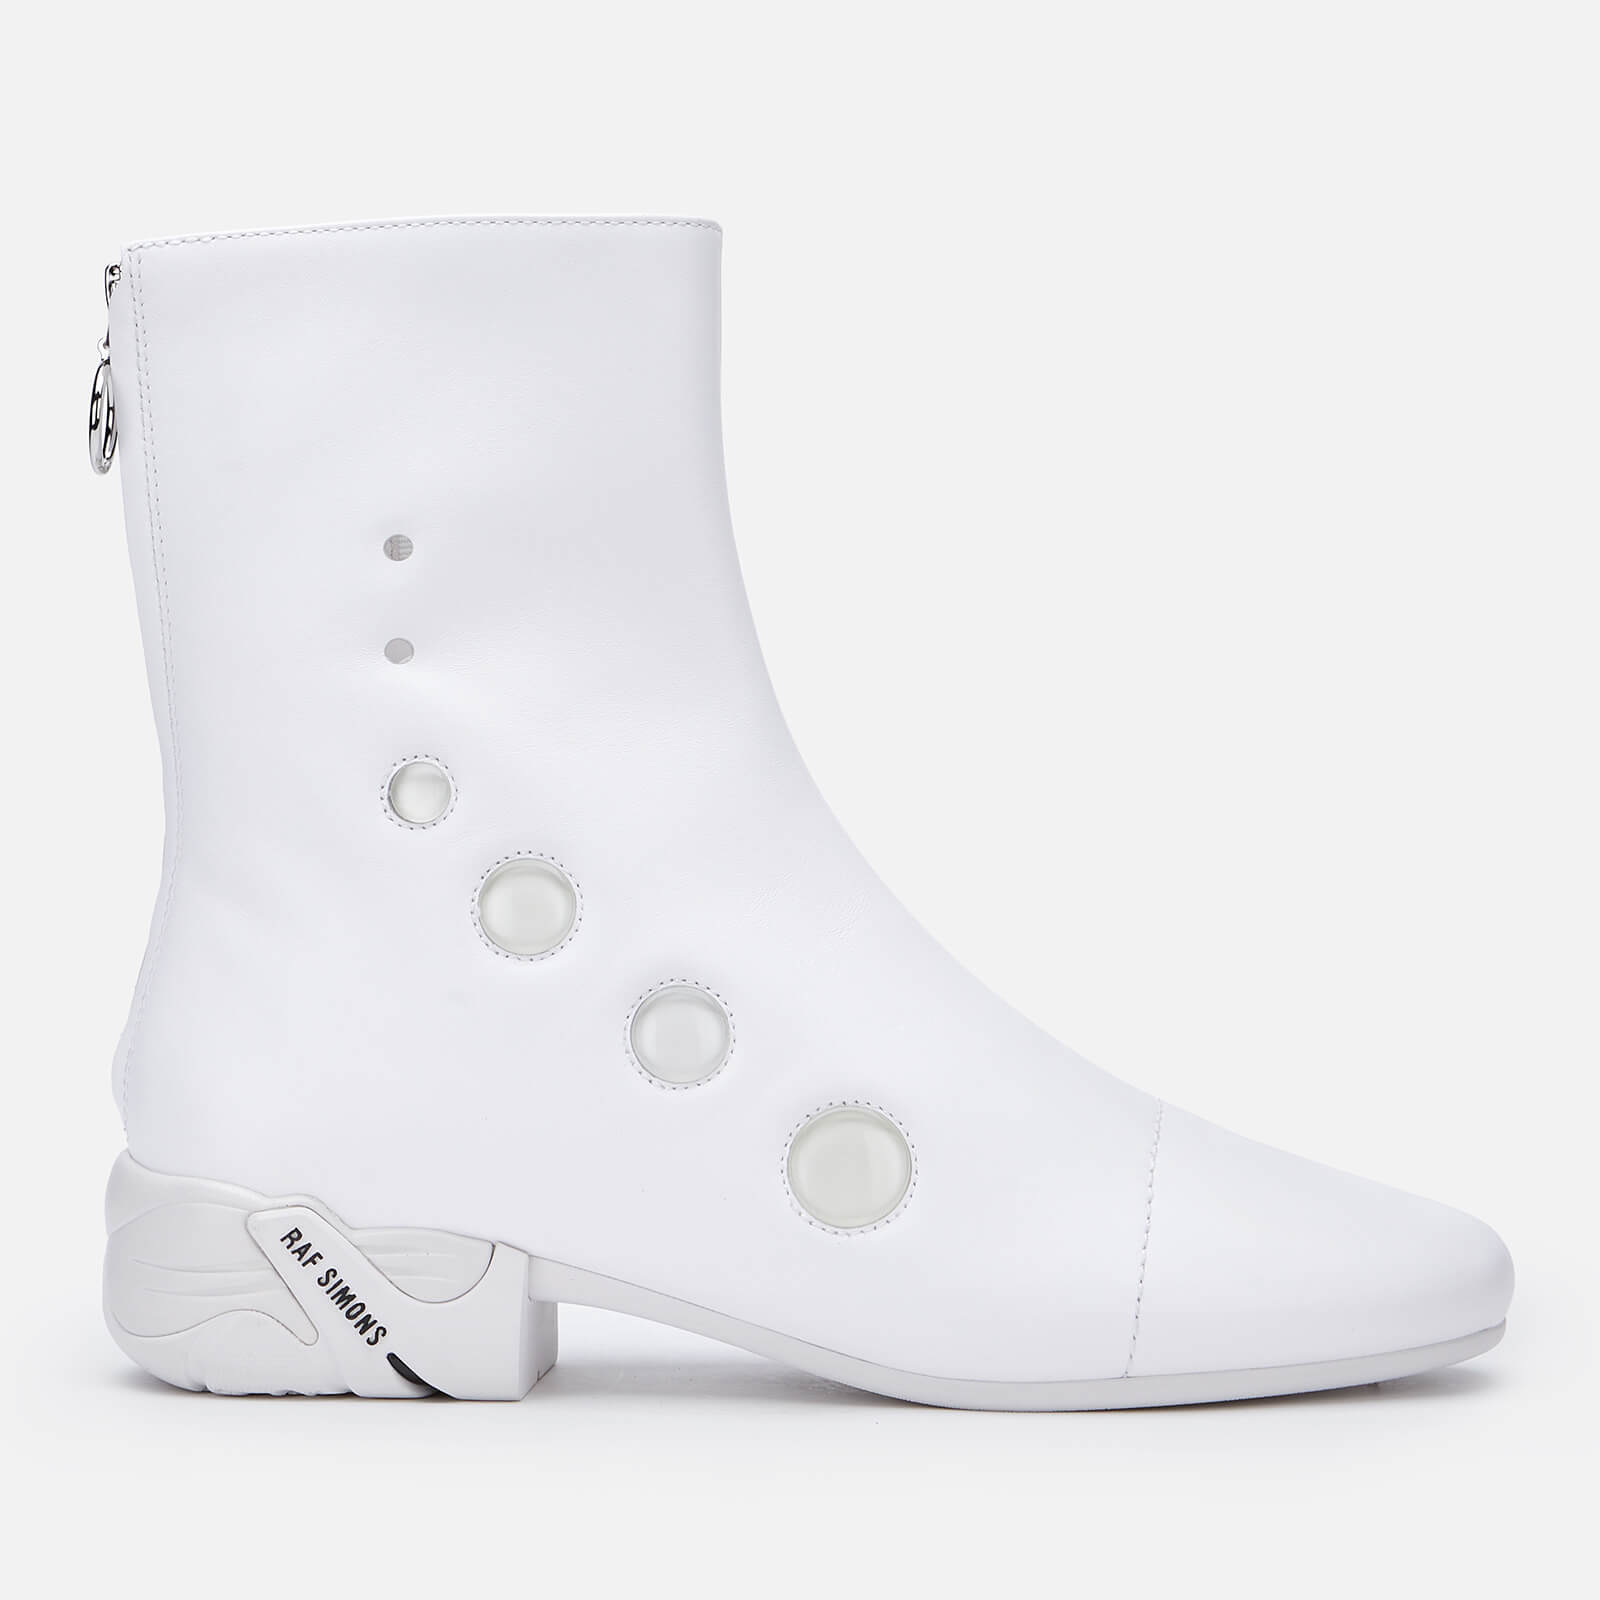 Raf Simons Men's 2001 Leather Boots - White - UK 8